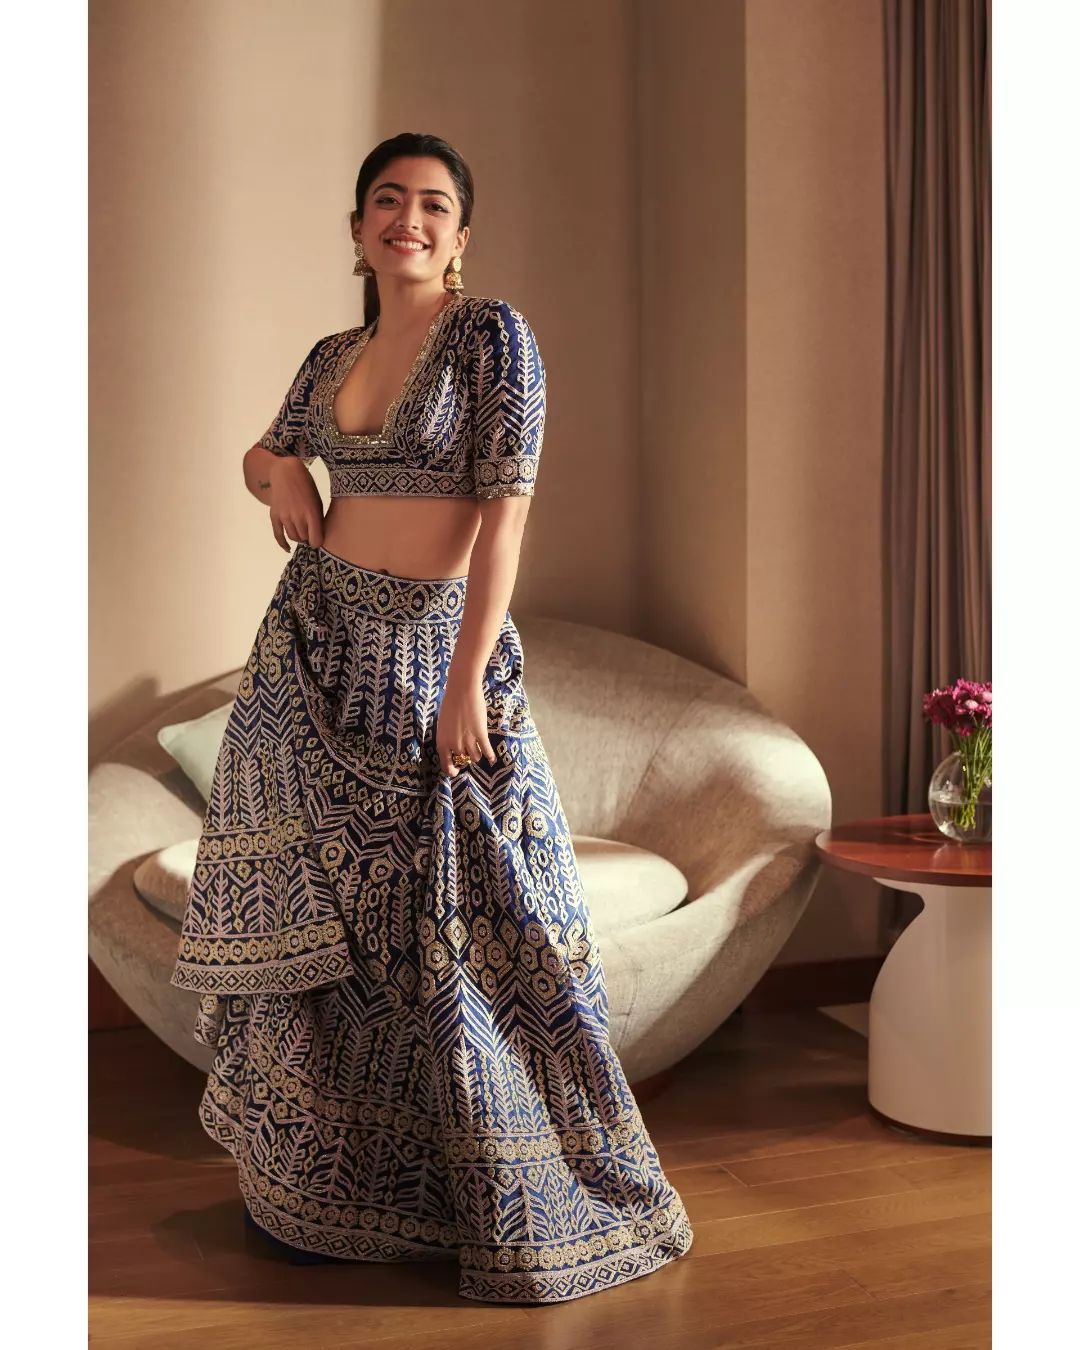 Rashmika Mandanna looks regal in the embellished blue lehenga